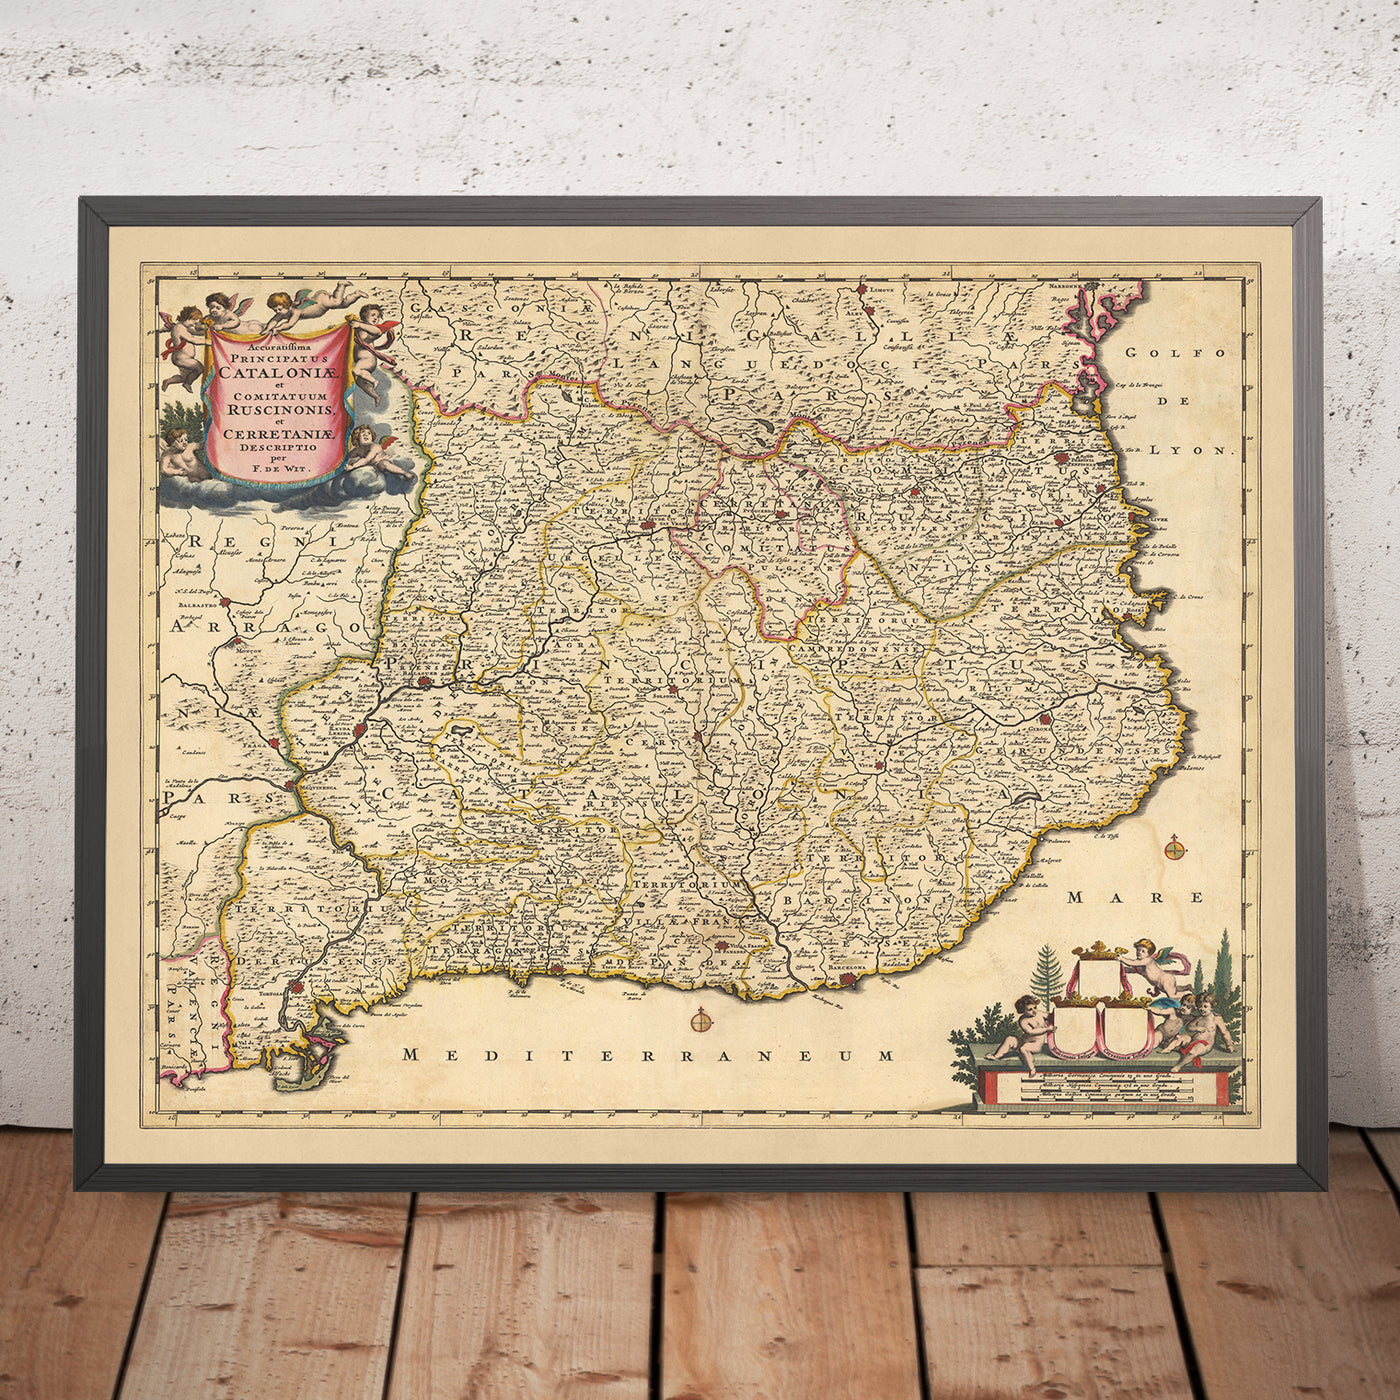 Old Map of Catalonia & Roussillon by Visscher, 1690: Barcelona, Tarragona, Girona, Perpignan, Pyrenees